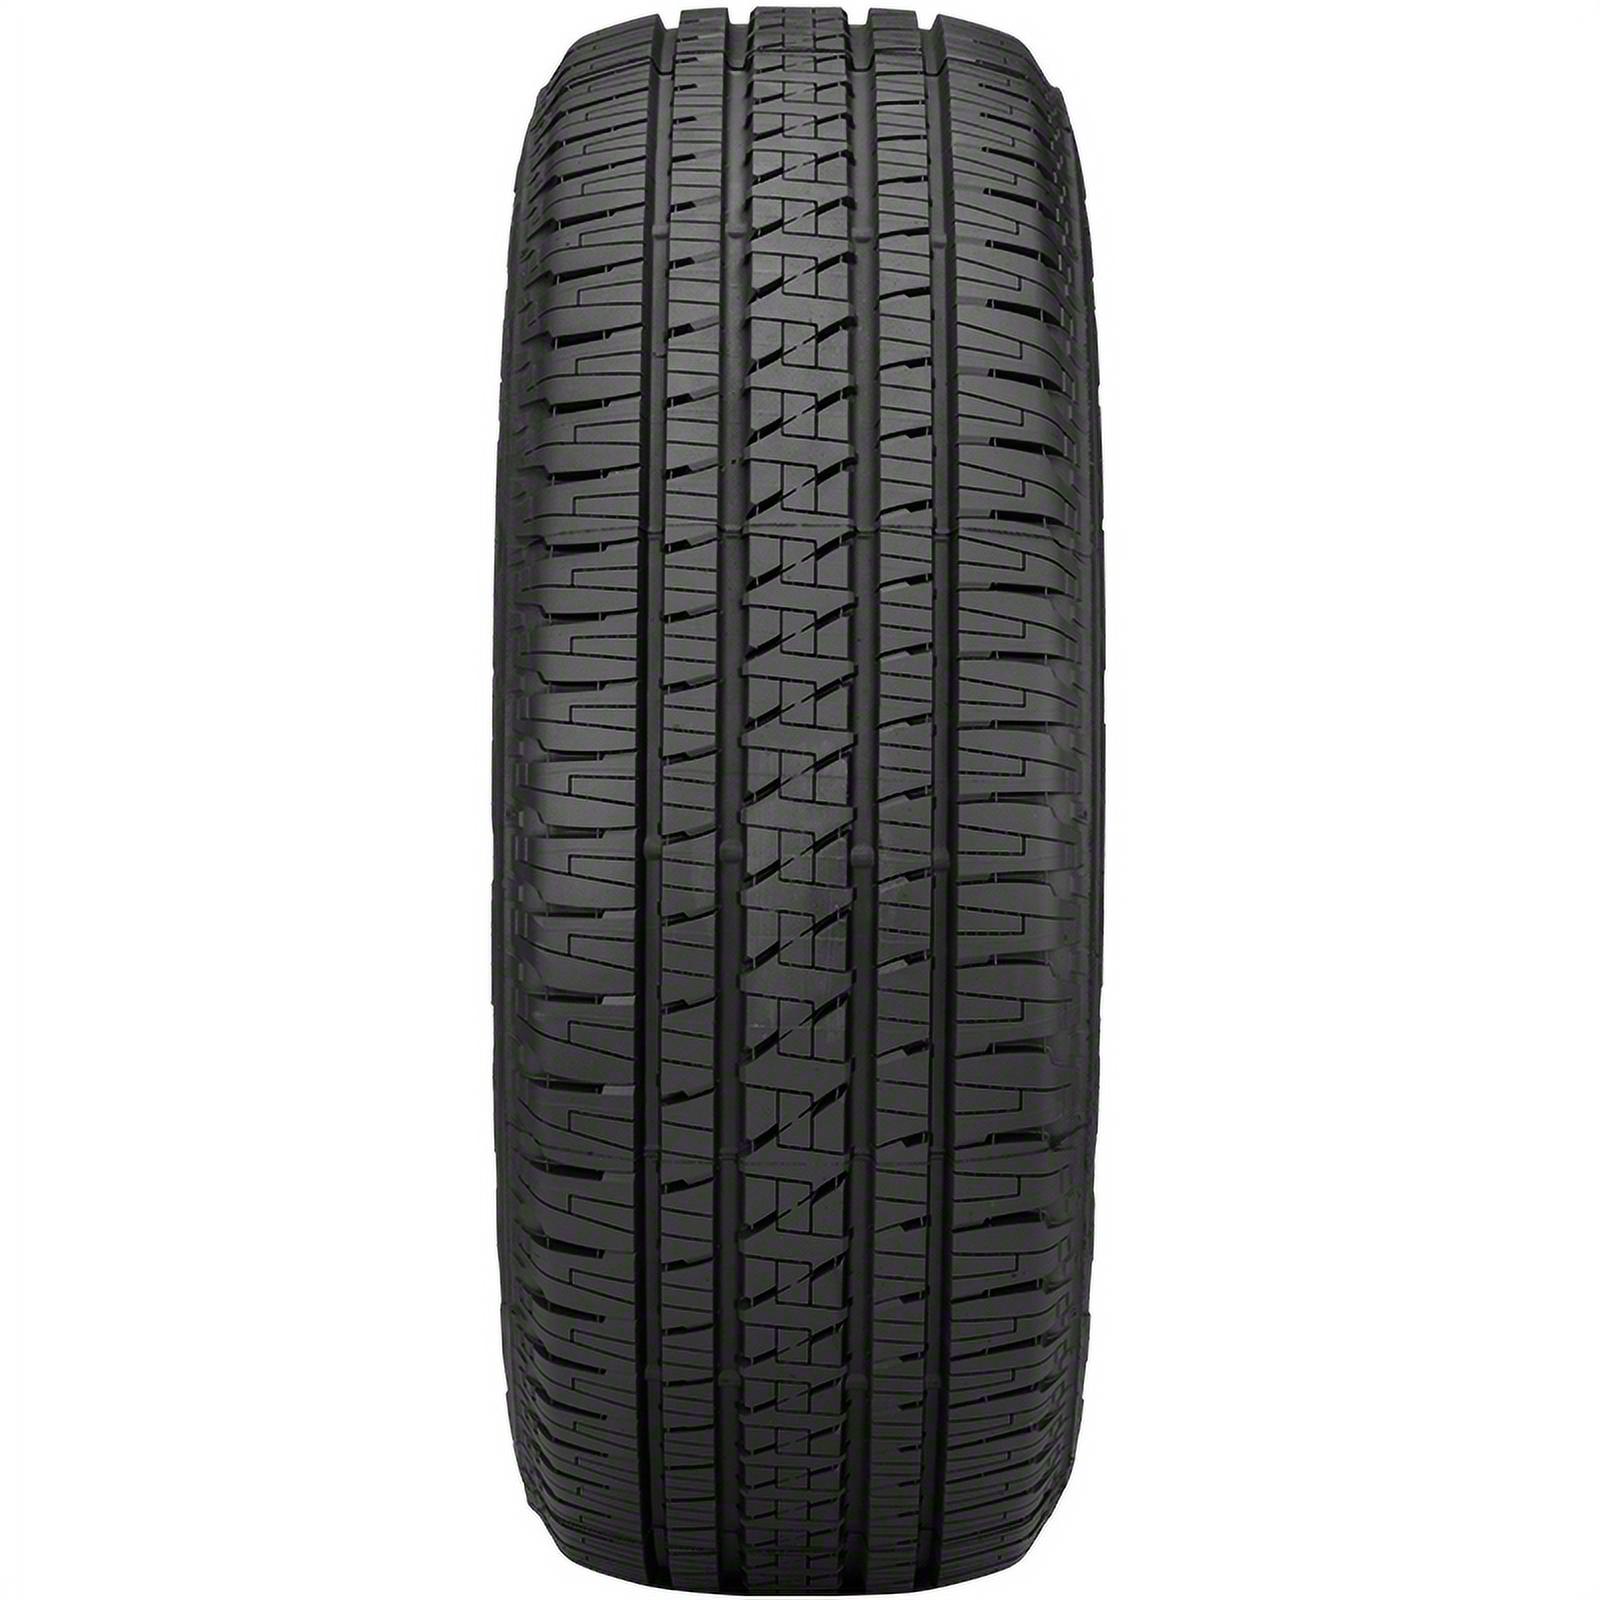 Bridgestone Dueler H/L Alenza Plus All Season P275/55R20 111H SUV/Crossover Tire - image 3 of 4